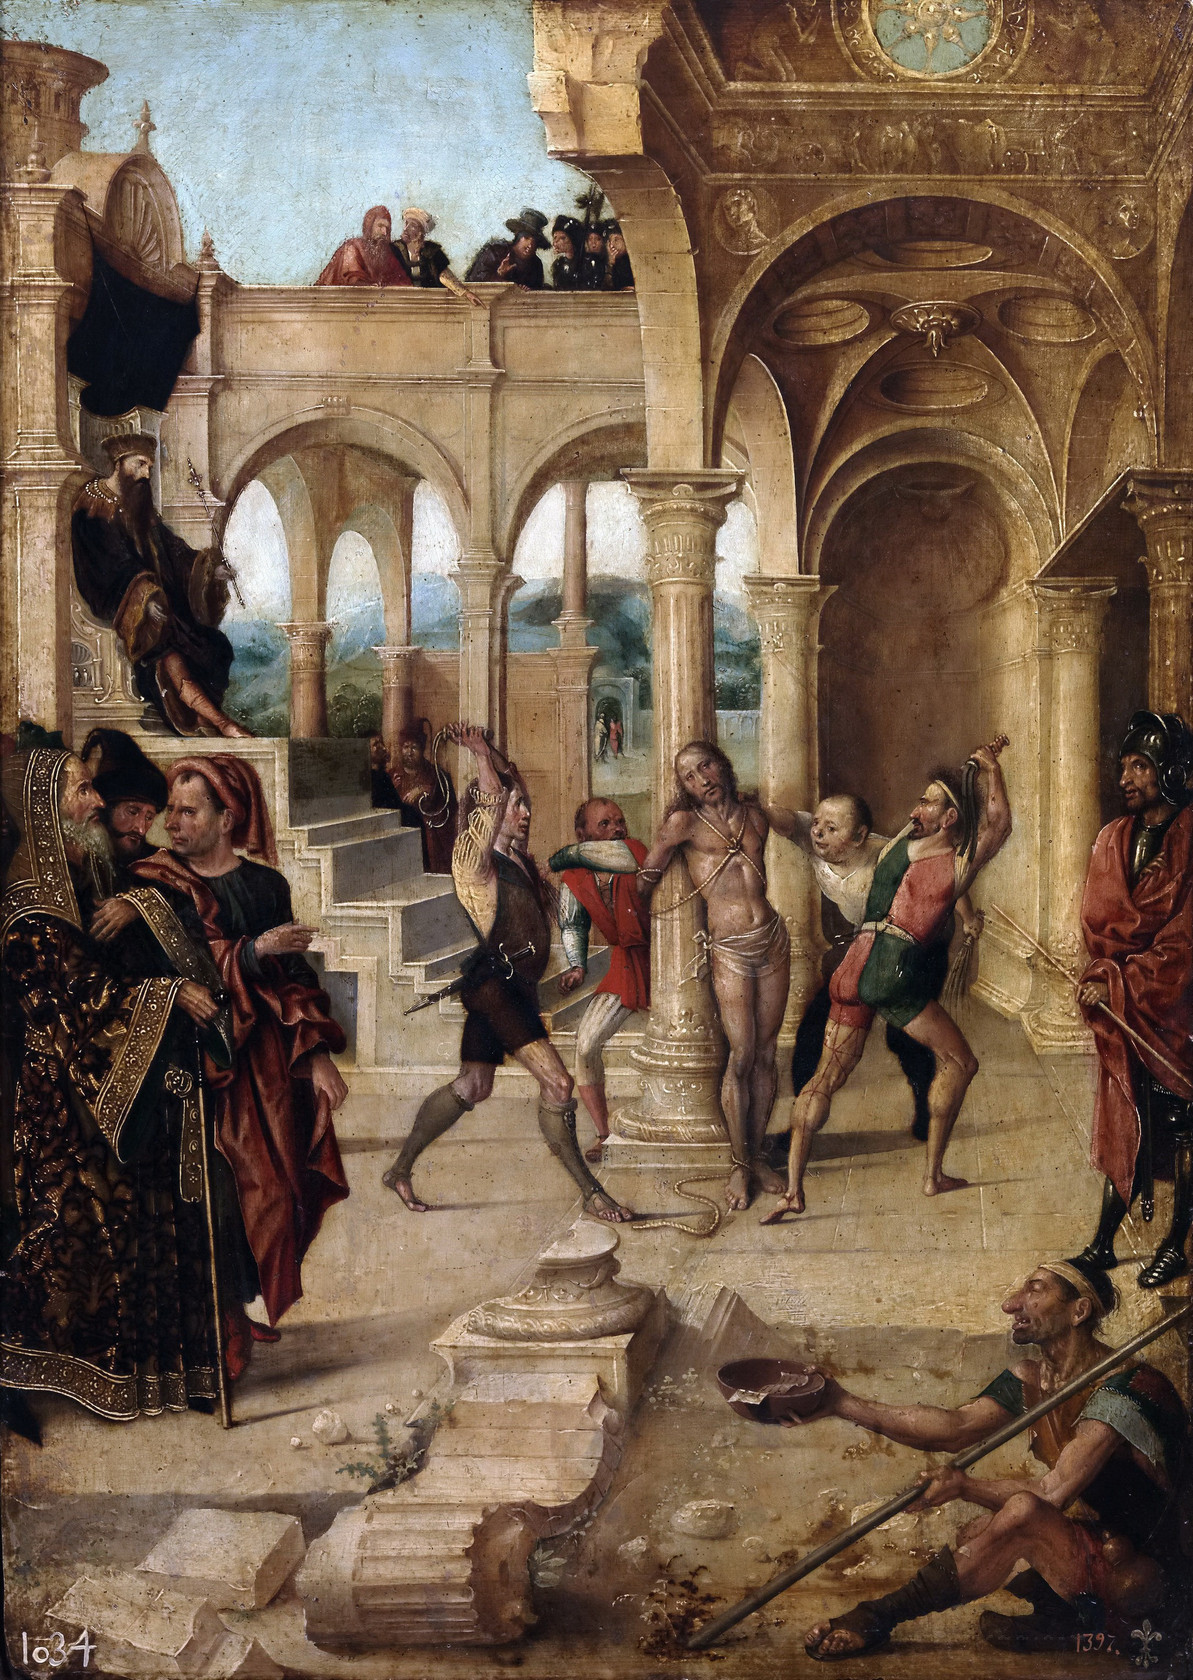 Картина Бичевание Христа, 1500 - 1505 - Музей Прадо